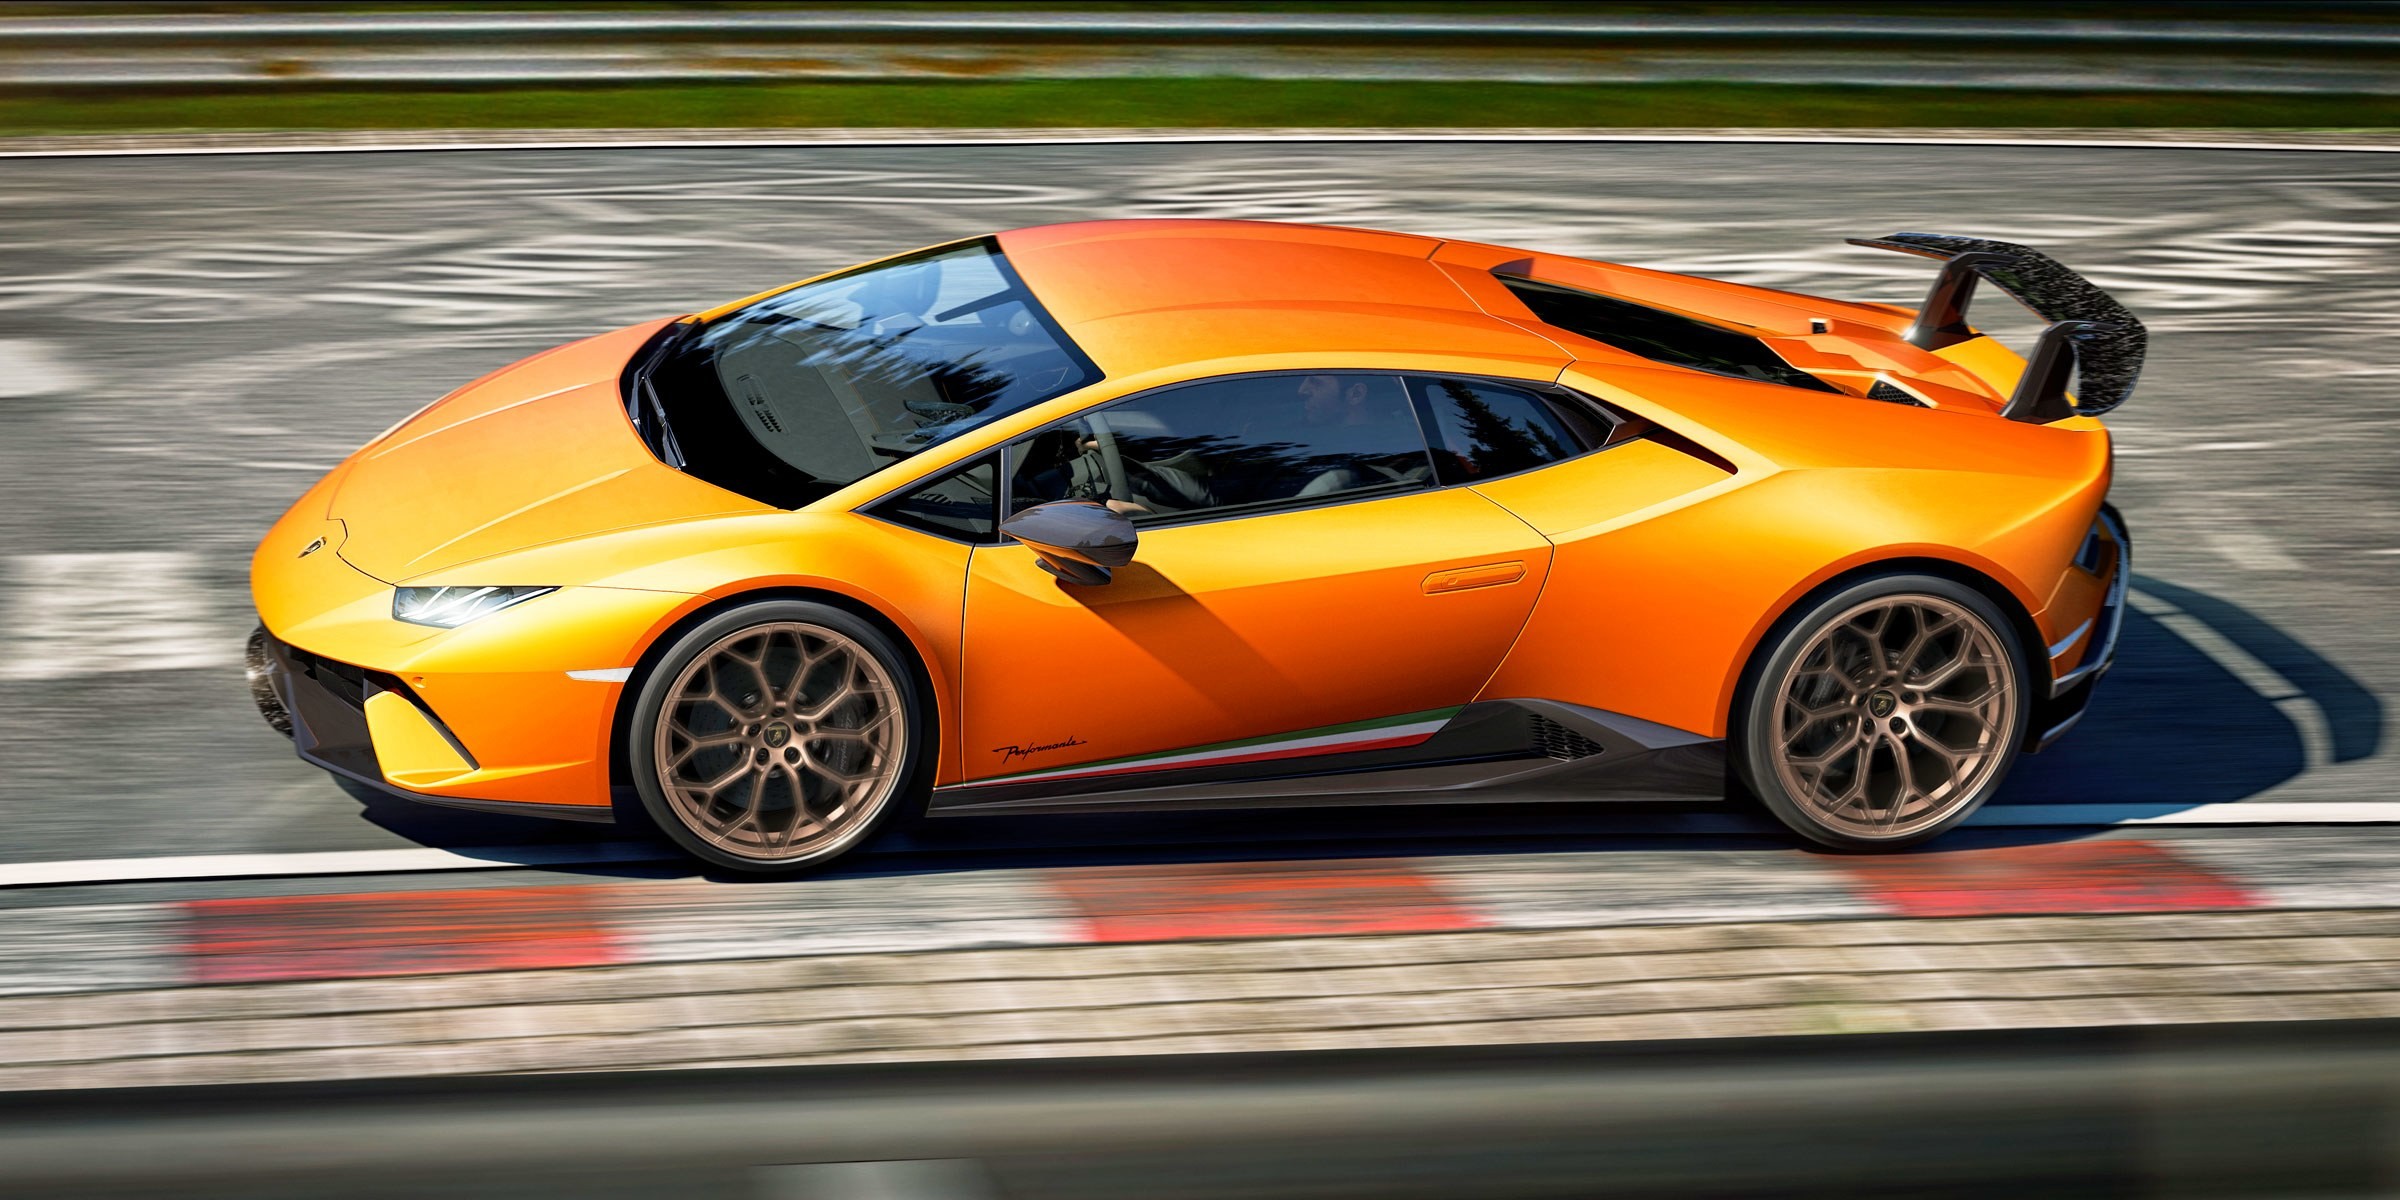 2400x1200 Slide: 1 / of 5. Caption: Lamborghini